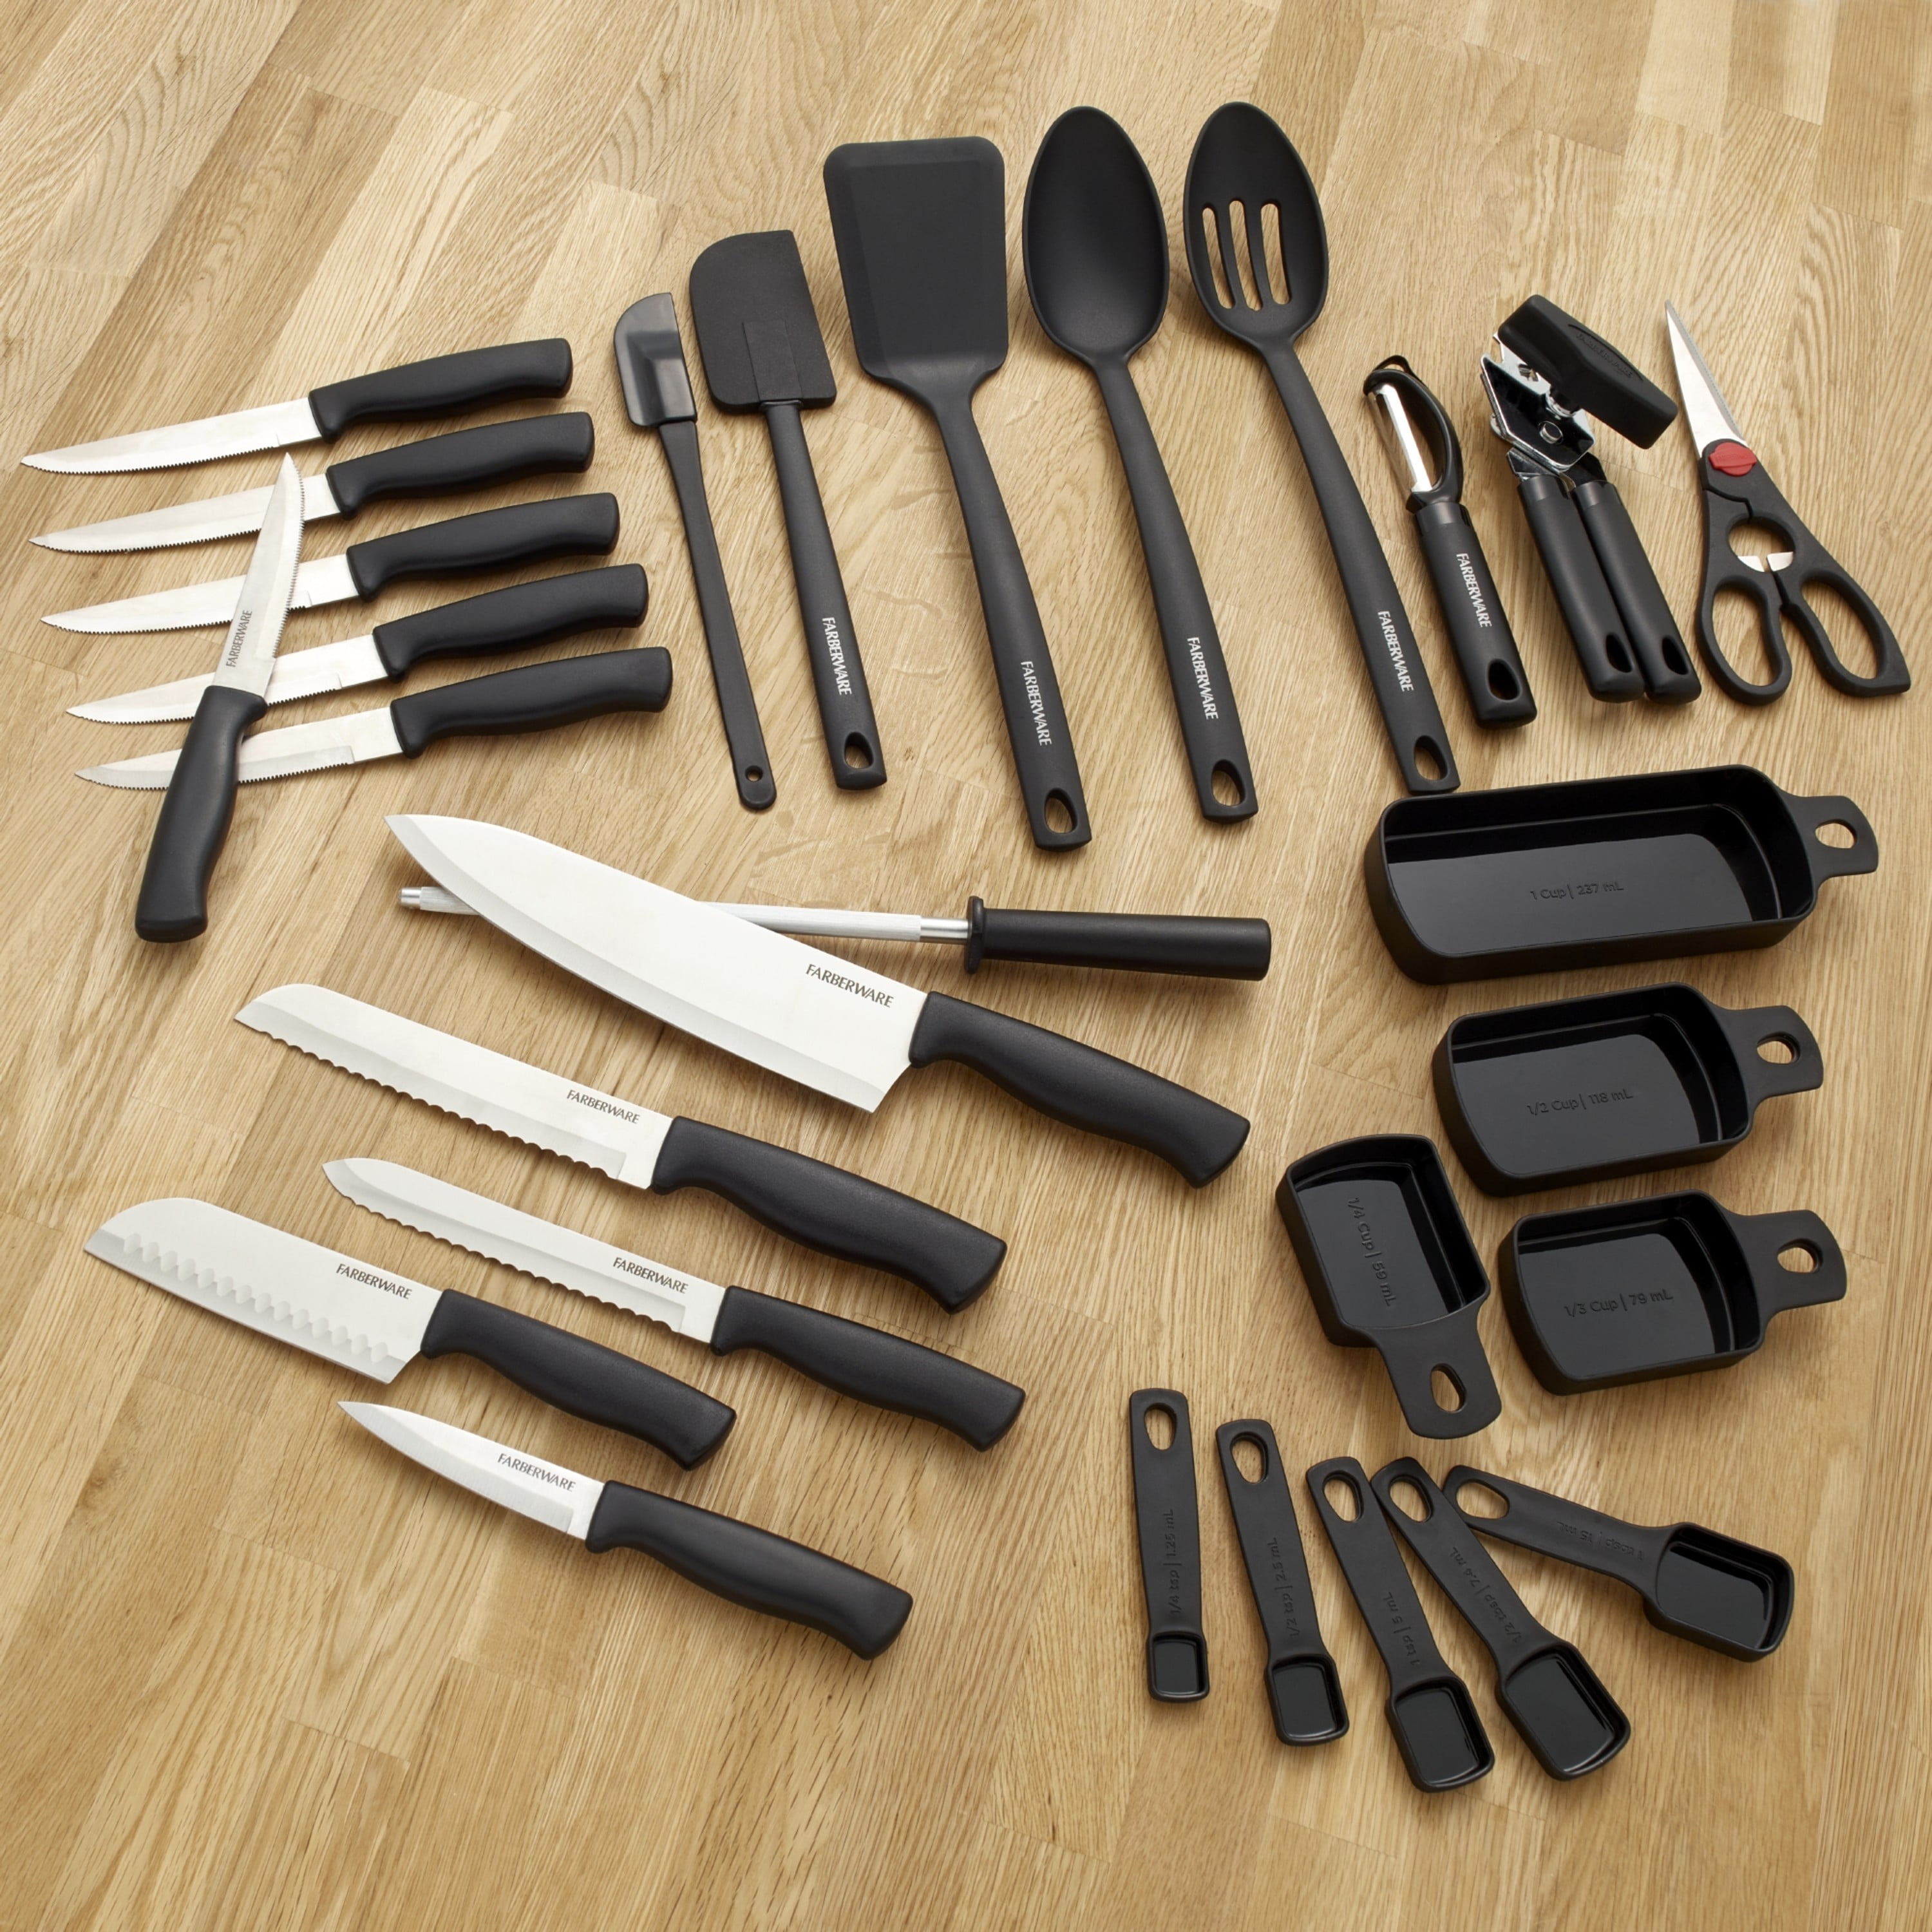 Wüsthof Classic 4-piece knife set, 1120160403  Advantageously shopping at